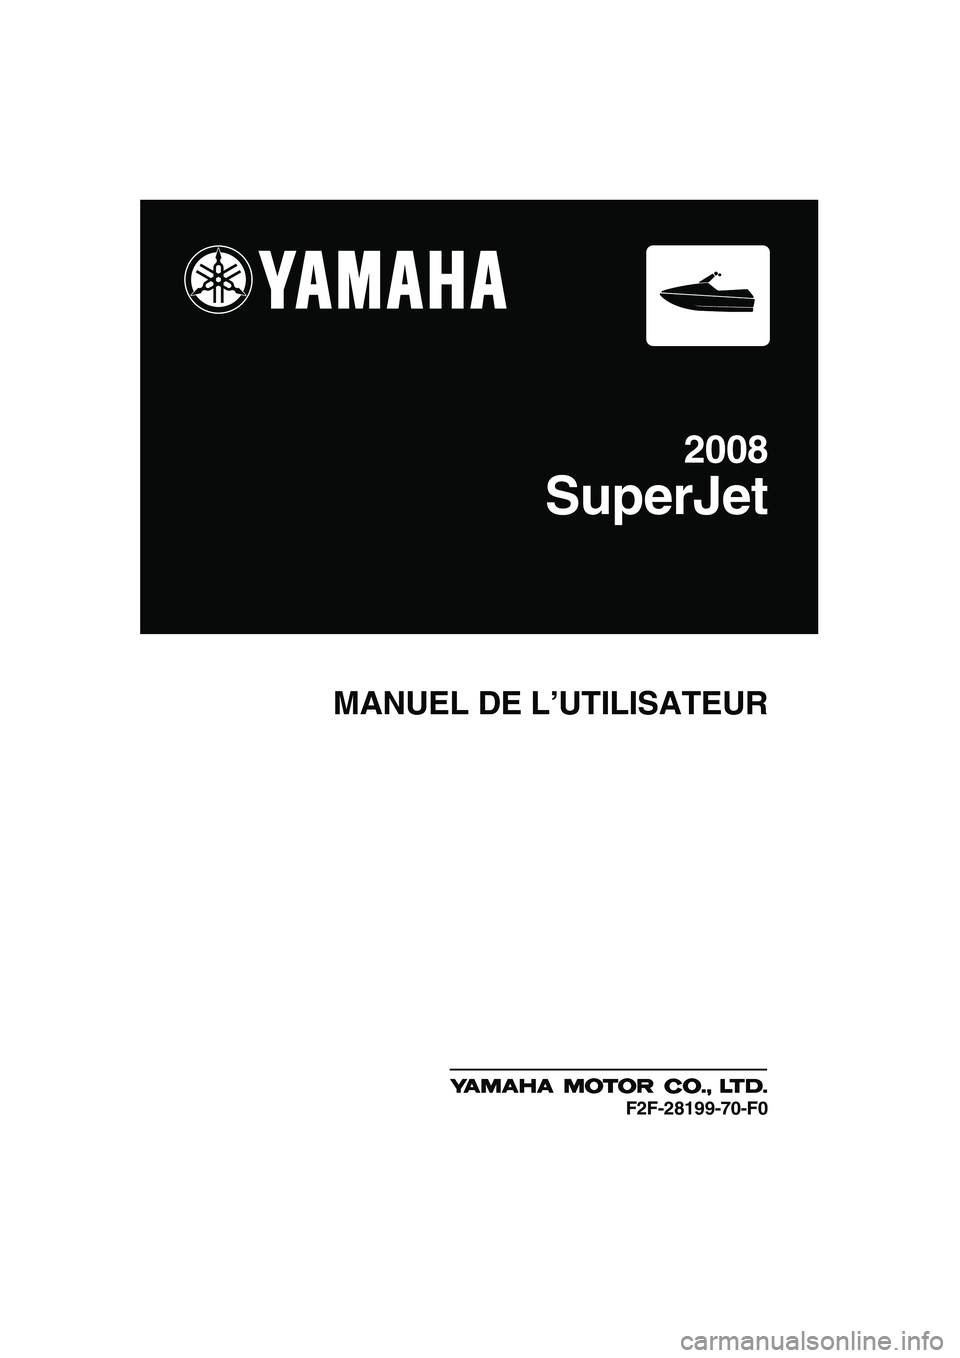 YAMAHA SUPERJET 2008  Notices Demploi (in French) MANUEL DE L’UTILISATEUR
2008
SuperJet
F2F-28199-70-F0
UF2F70F0.book  Page 1  Tuesday, April 17, 2007  10:04 AM 